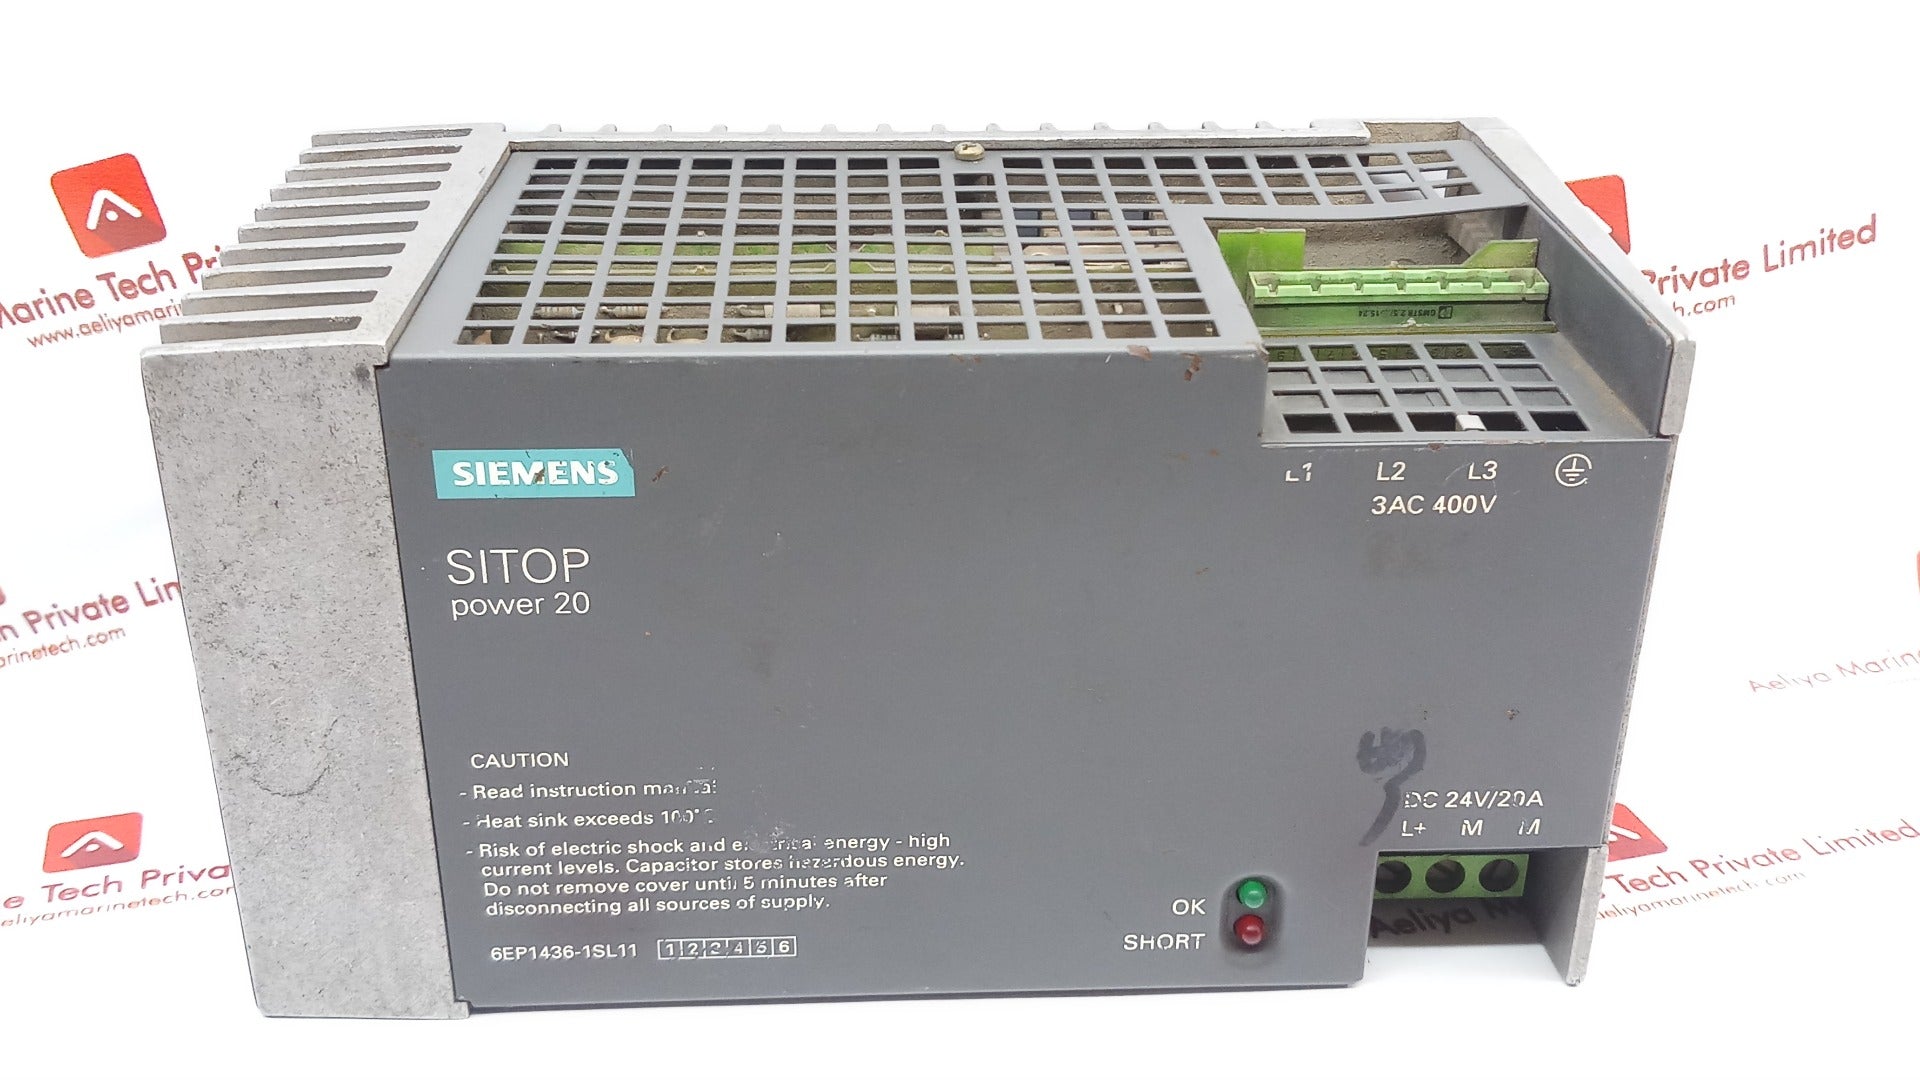 Siemens Sitop Power 20 6Ep1436-1Sl11 Power Supply